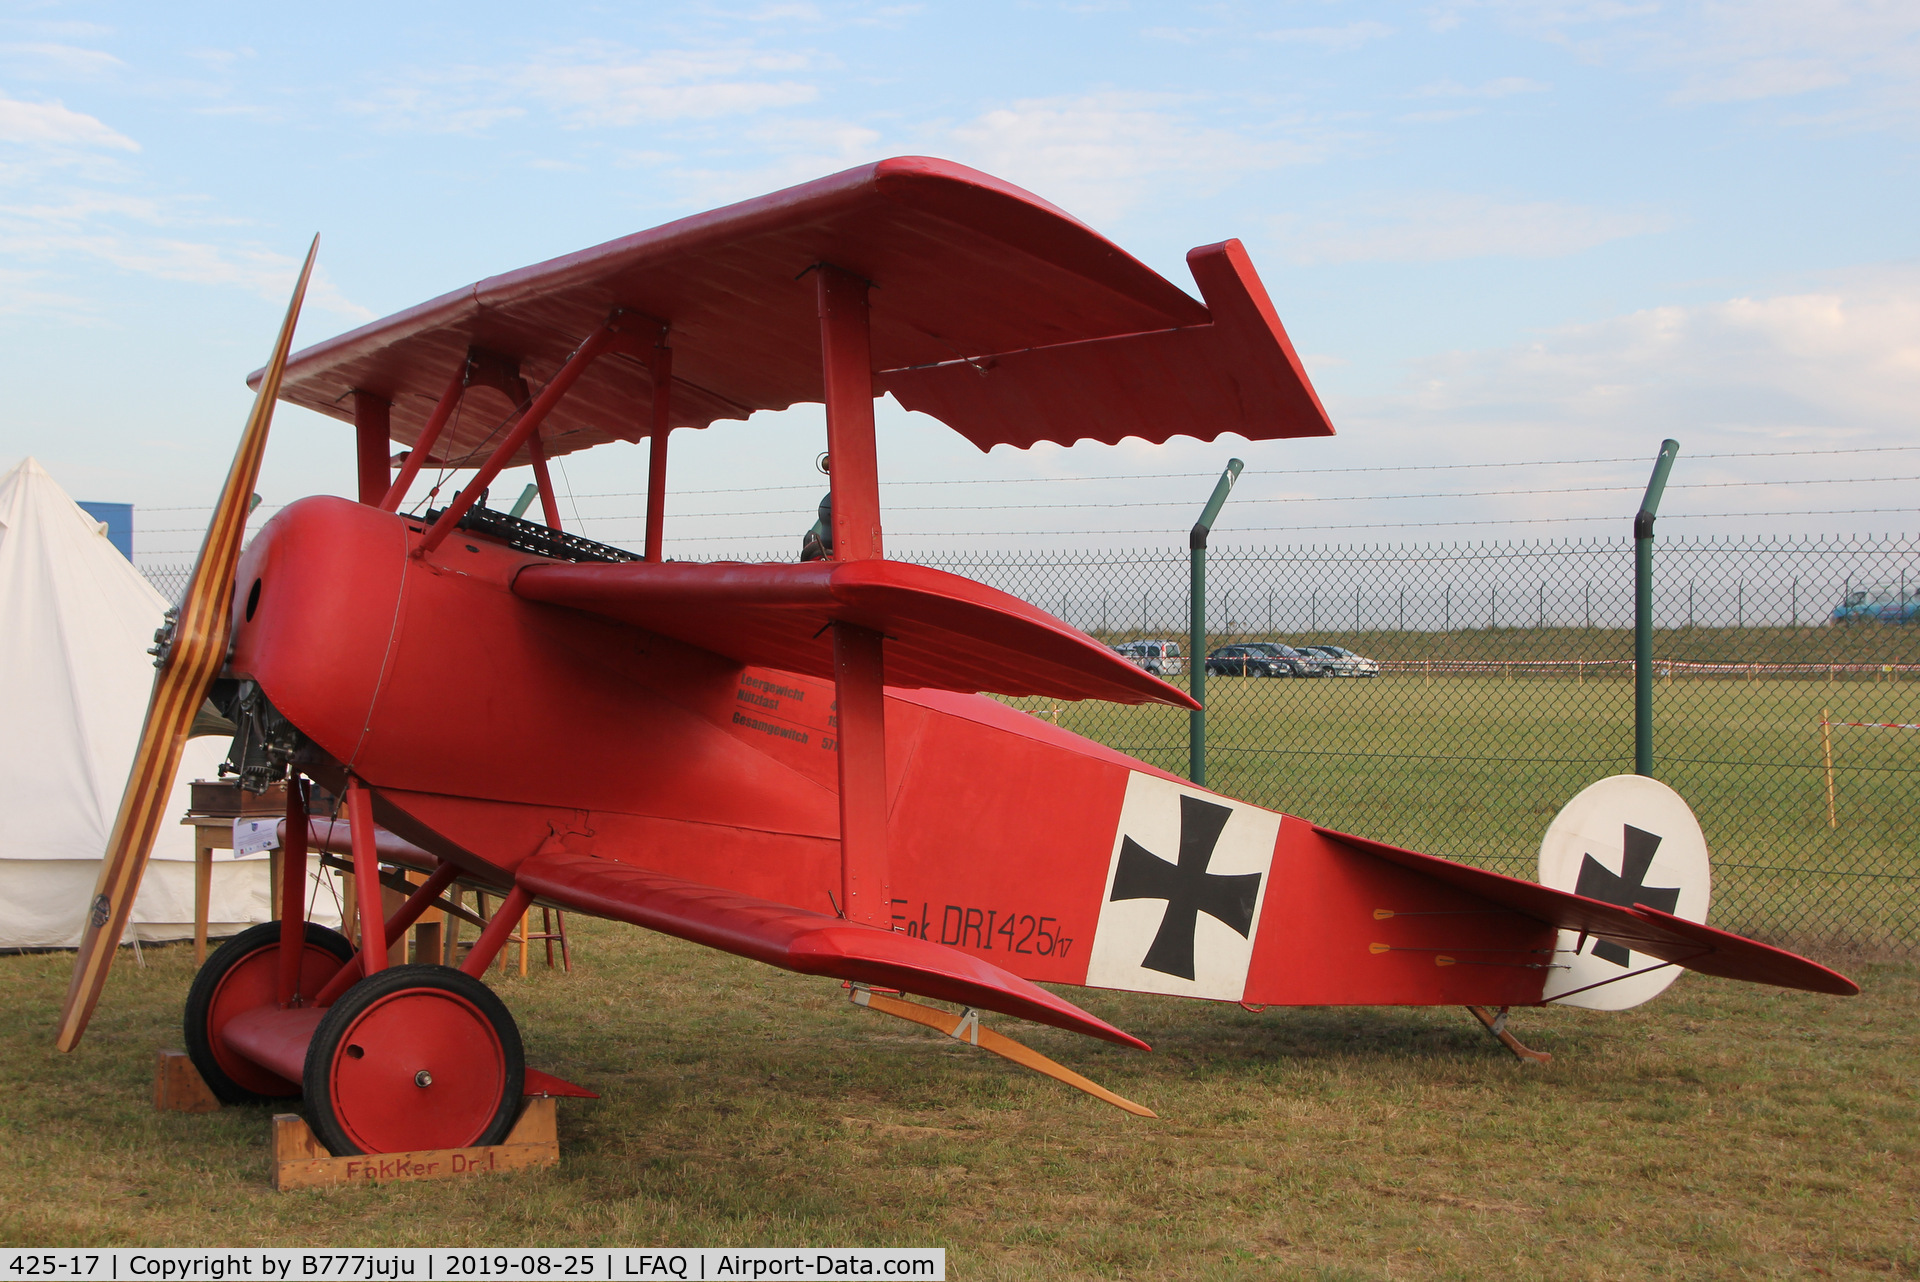 425-17, Fokker Dr.1 Triplane Replica C/N Not found 425-17 (1), during Albert Airshow